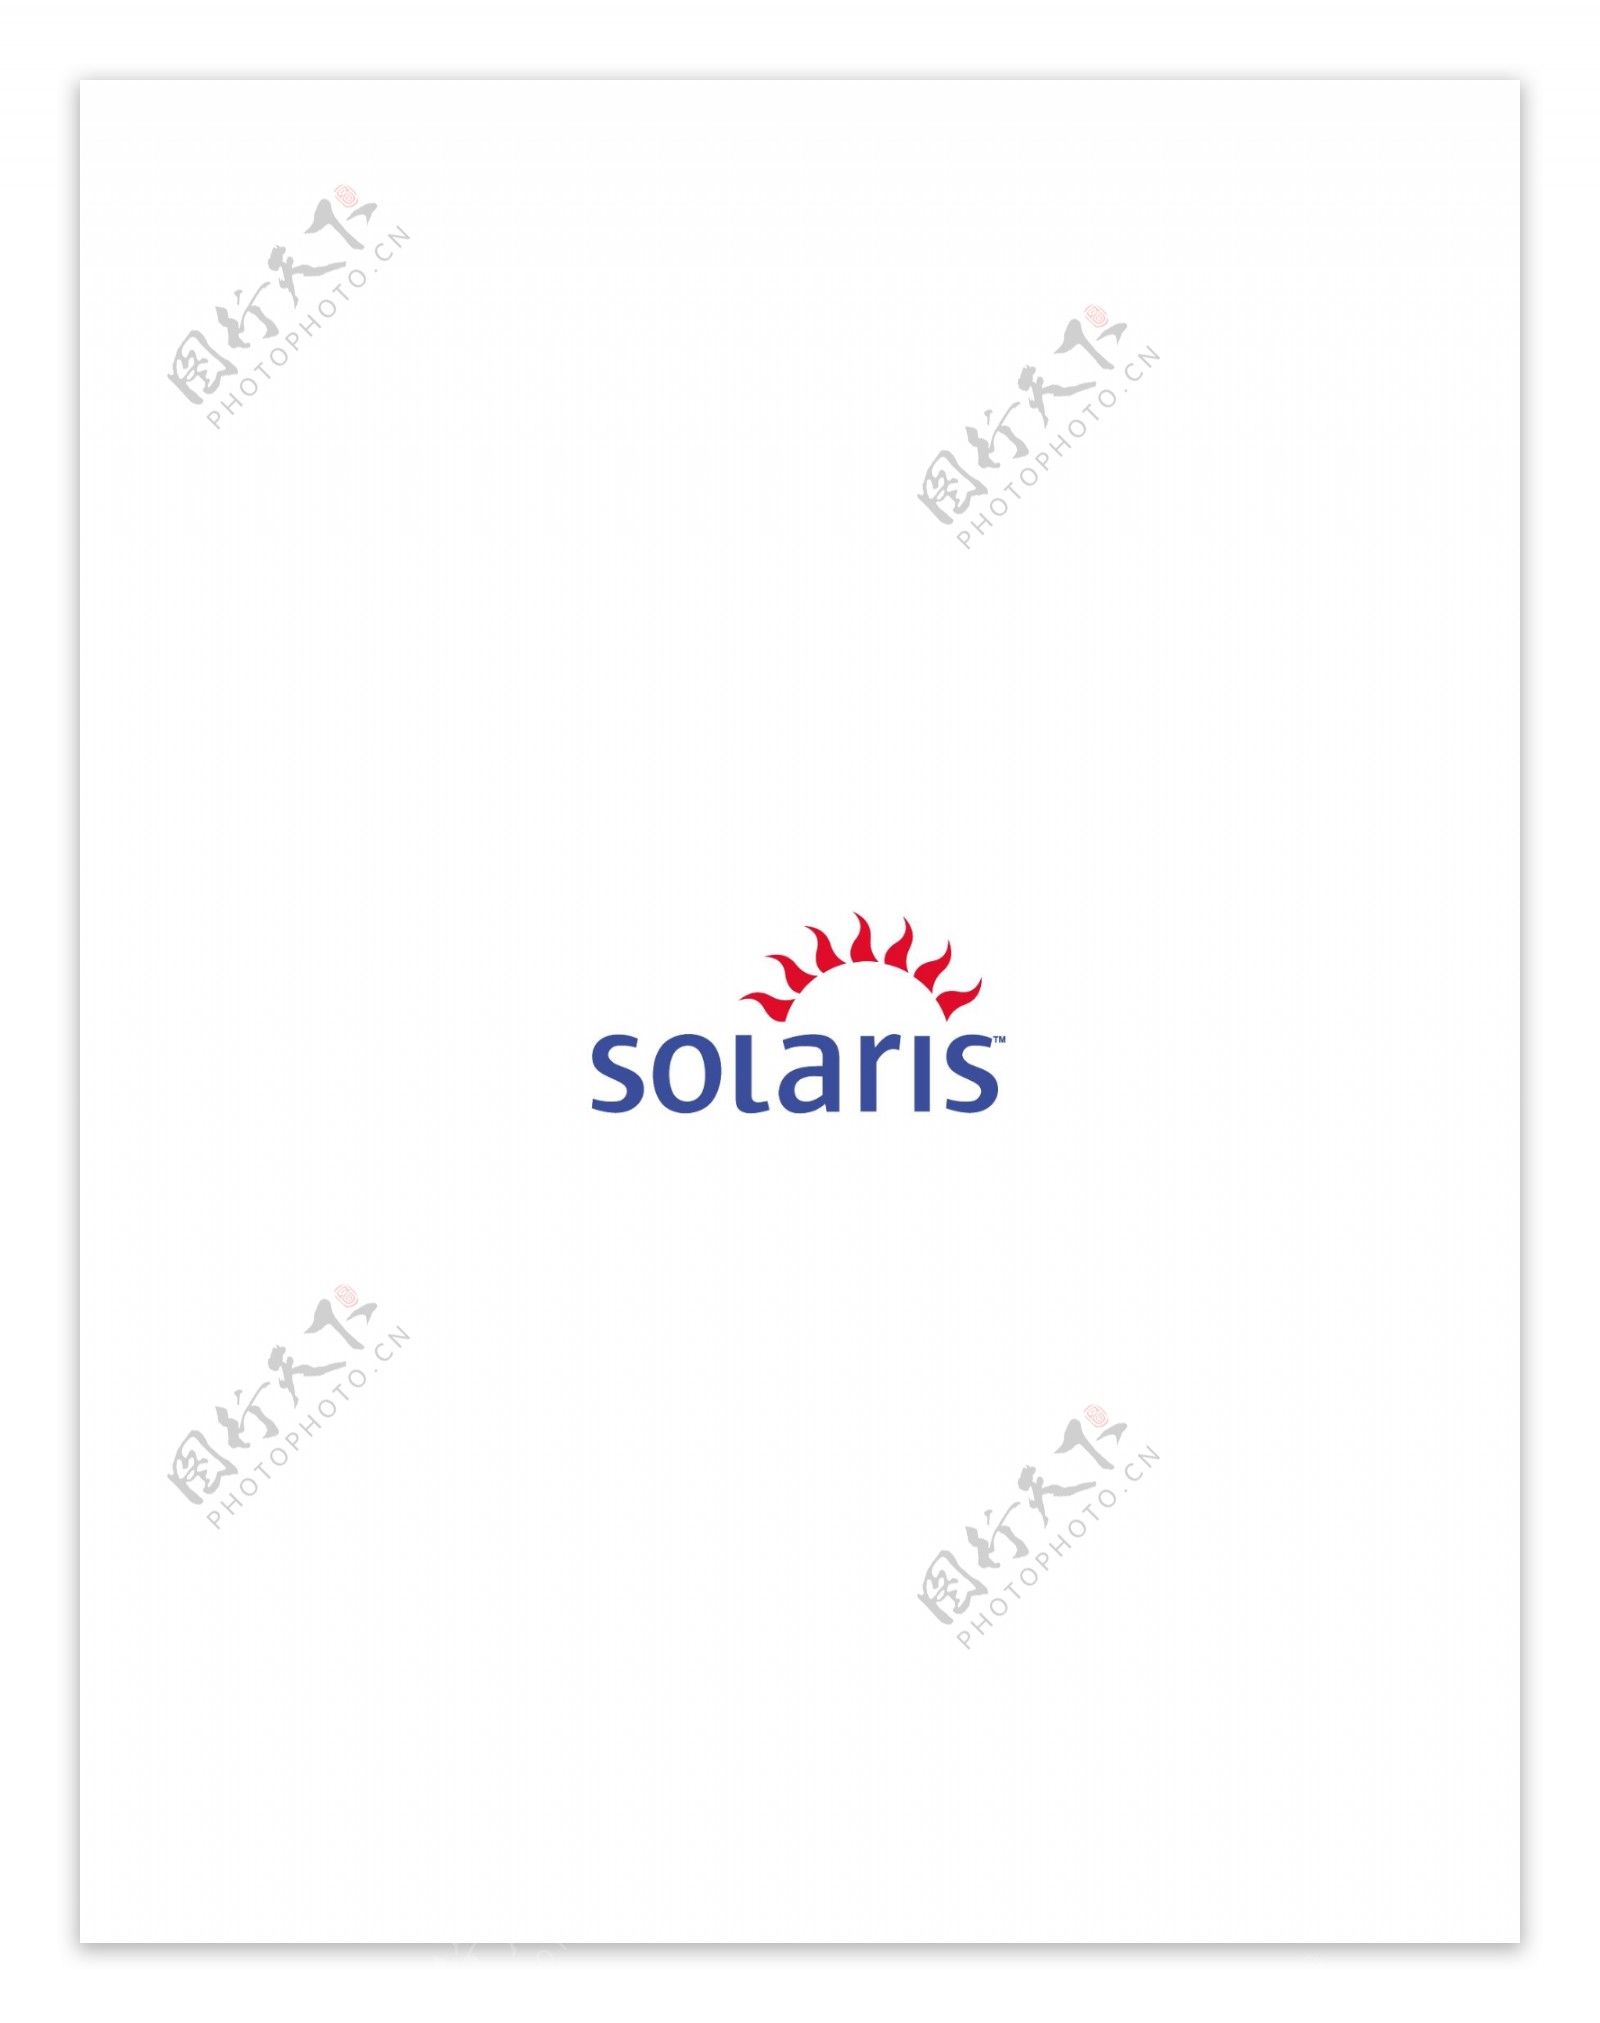 Solarislogo设计欣赏Solaris网络公司标志下载标志设计欣赏